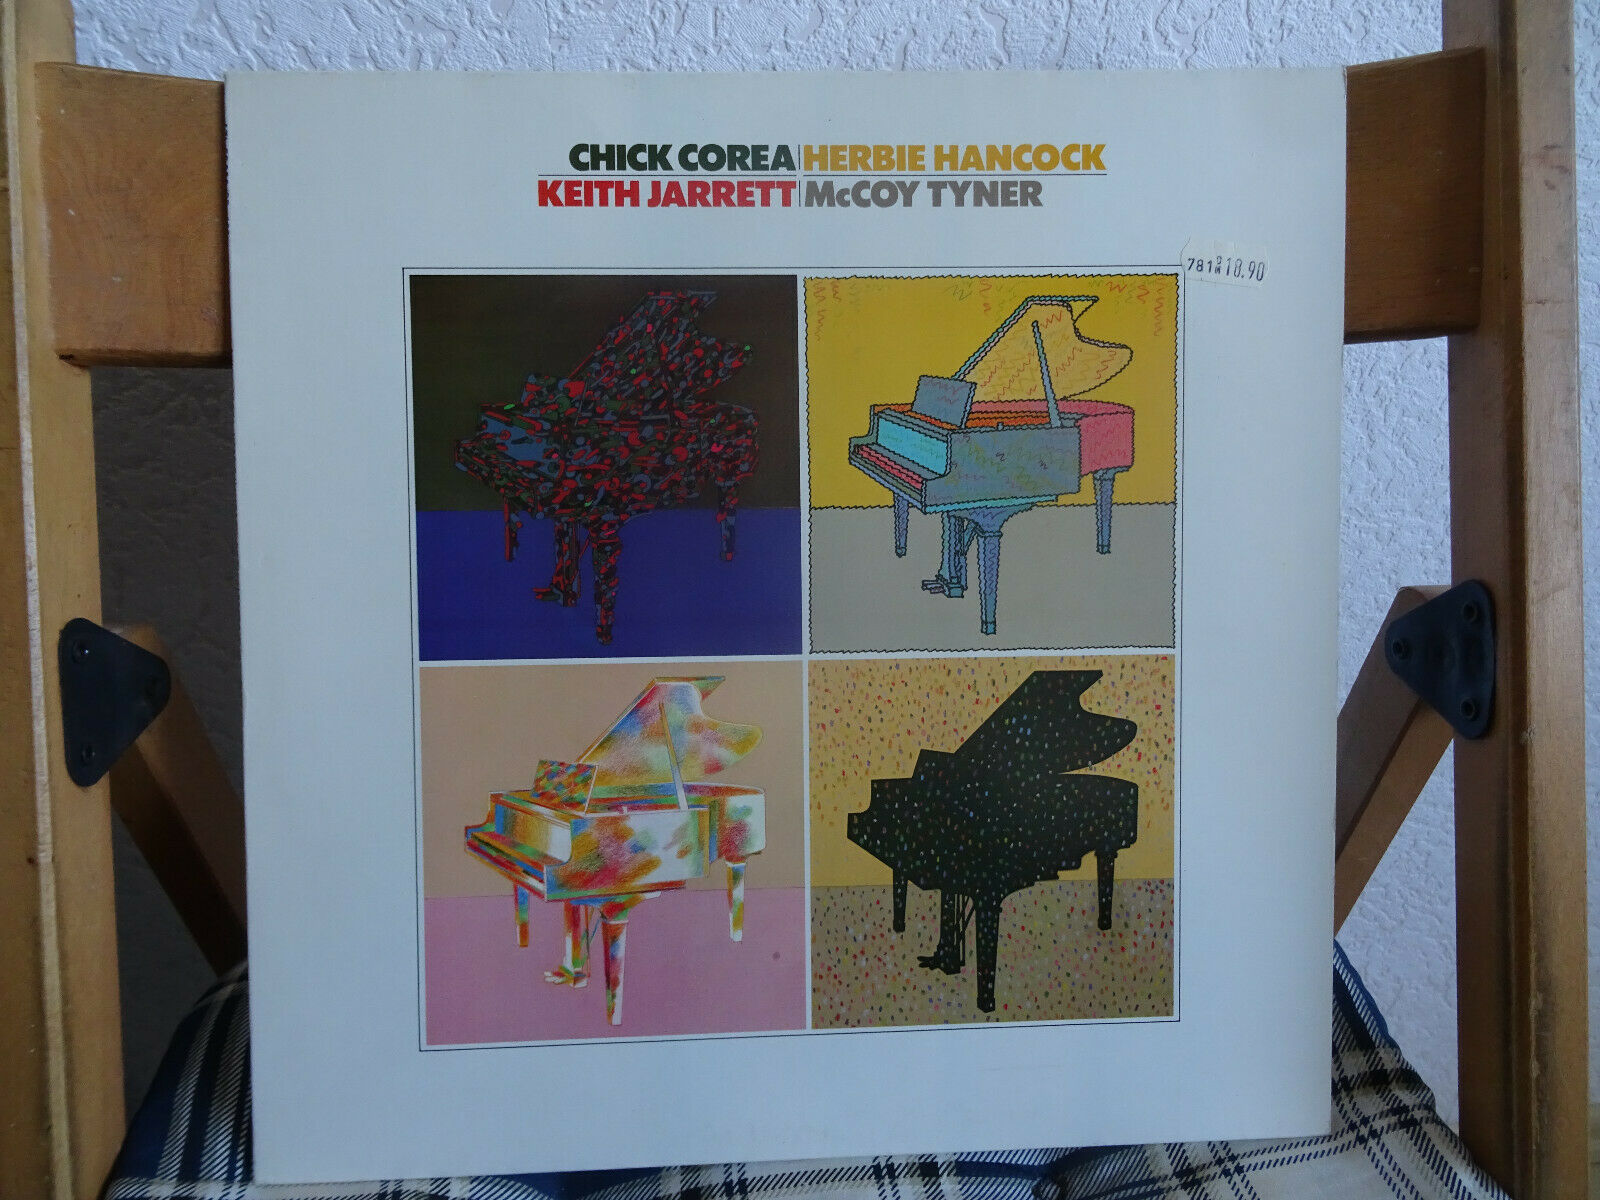 Chick Corea, Herbie Hancock, Keith Jarrett, Mc Tyner, LP, Piano, 1976, vg++